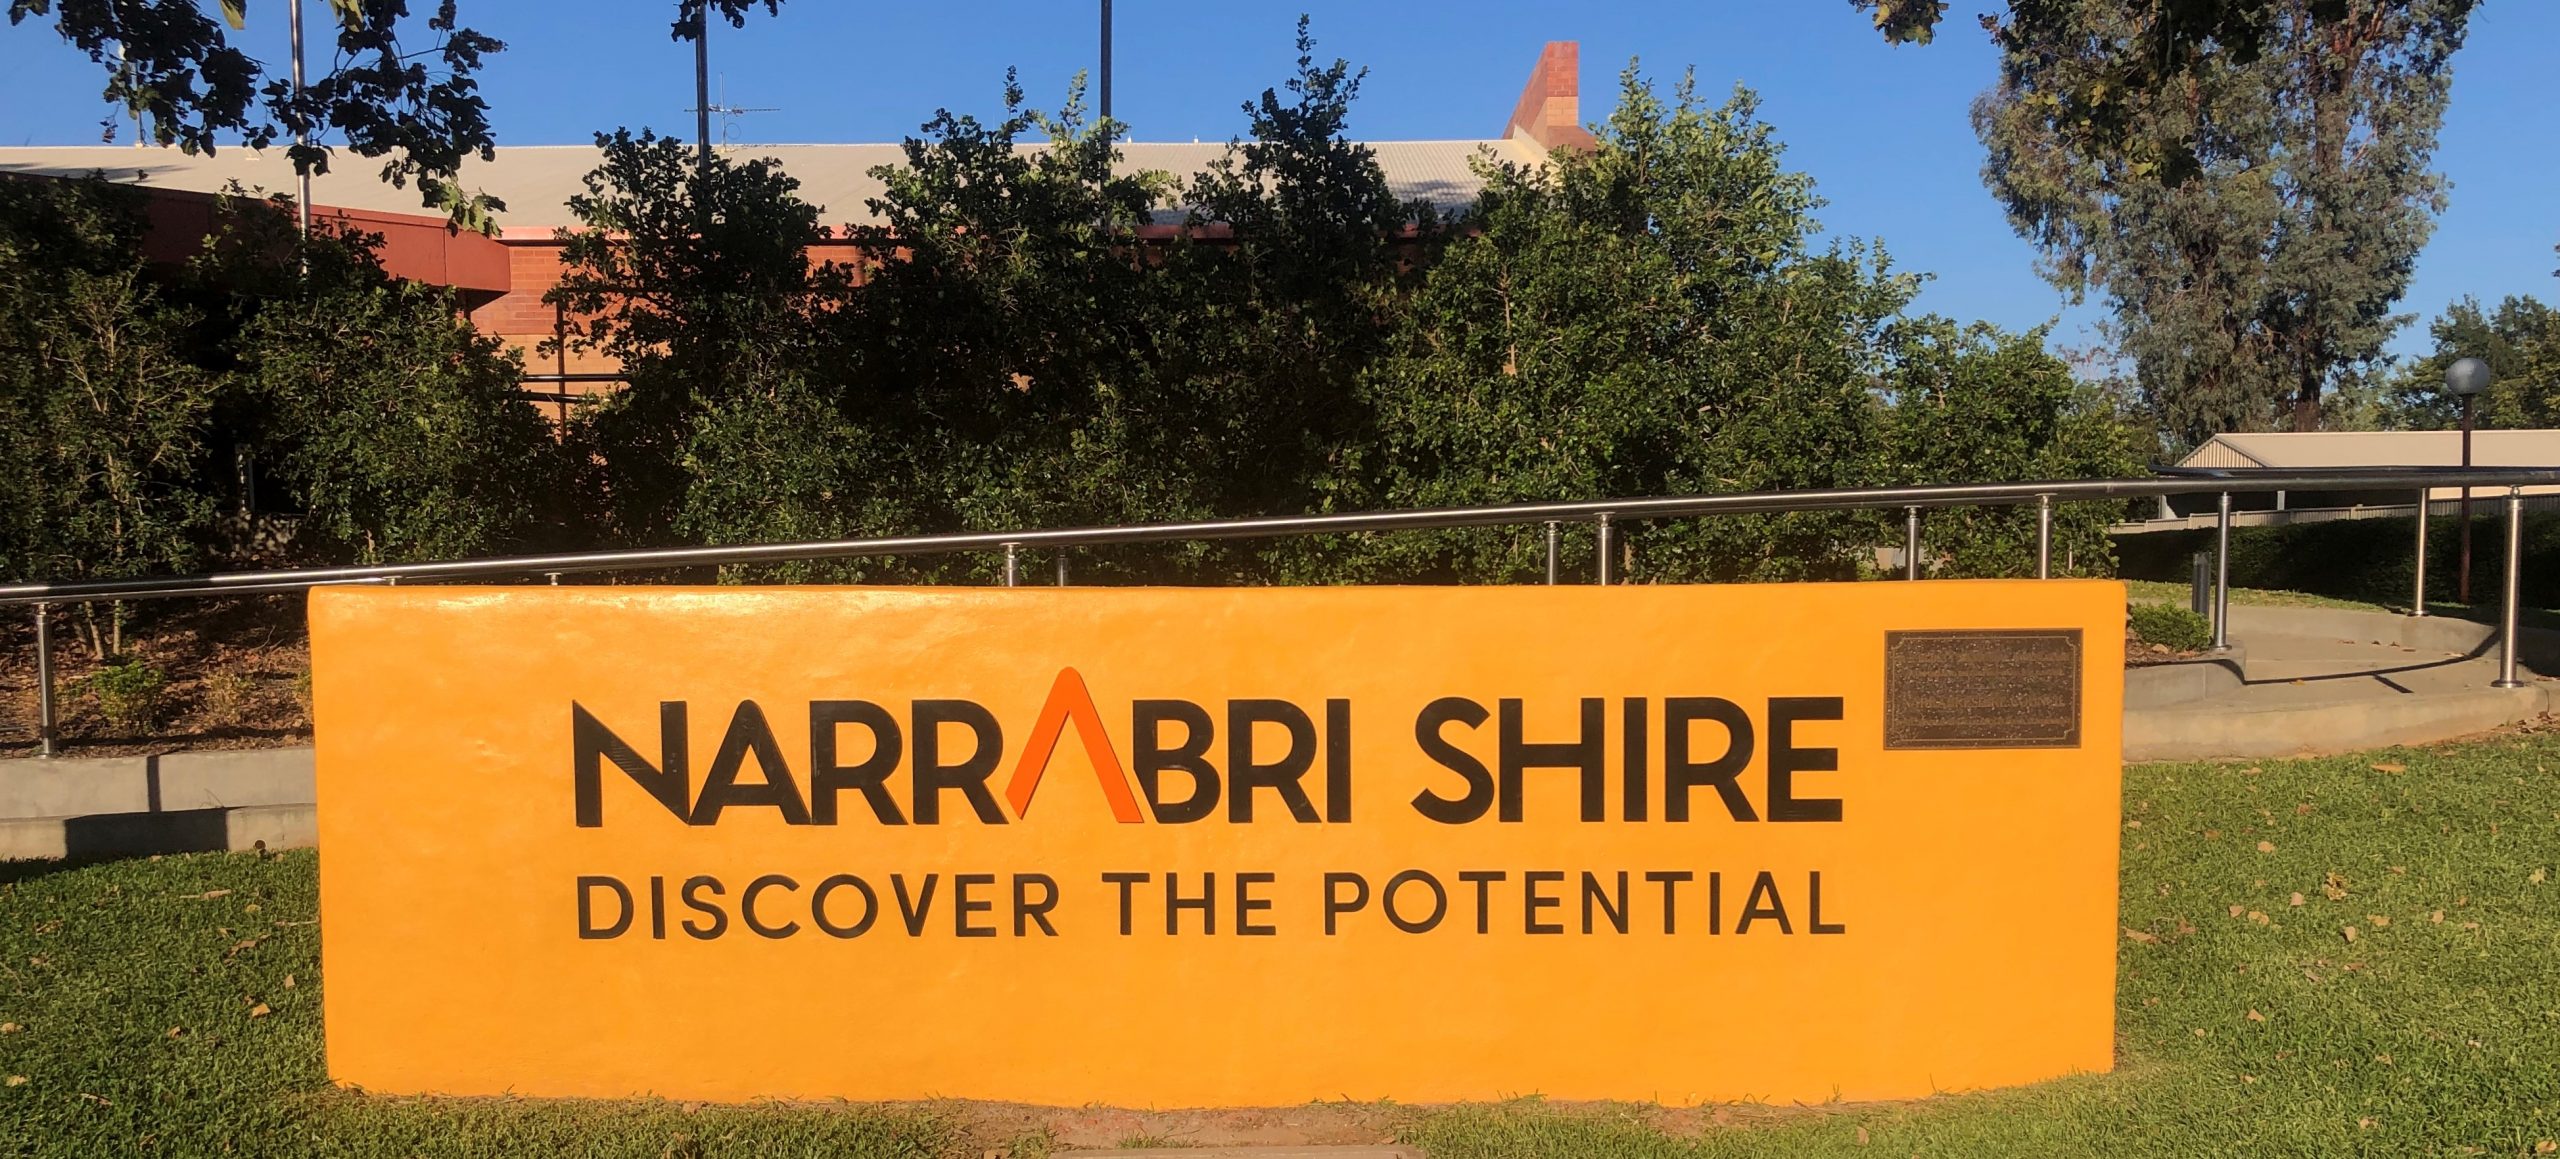 Narrabri Shire Council releases council services statement